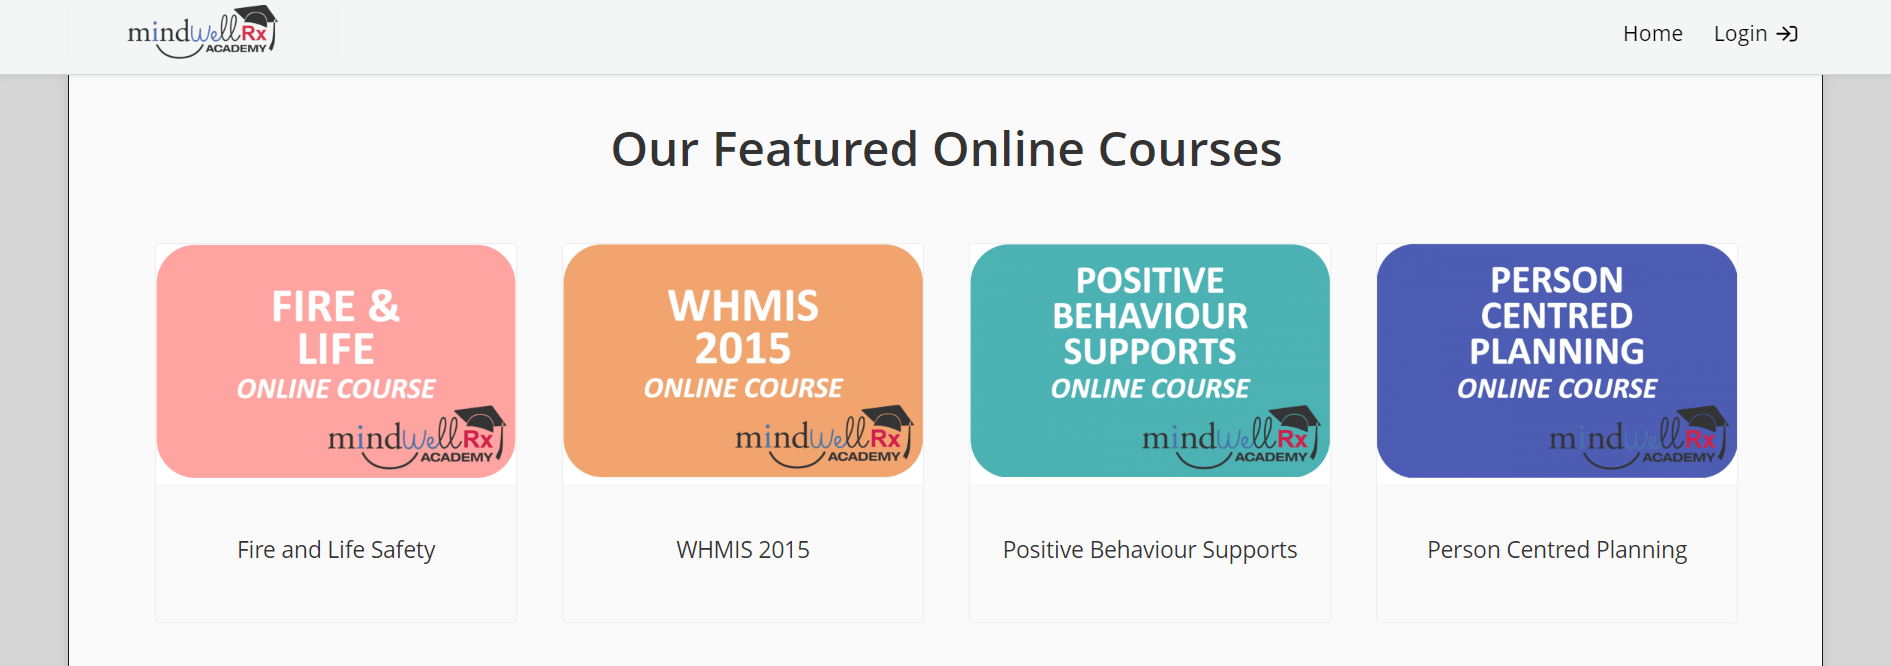 mindwellrx academy training portal homepage